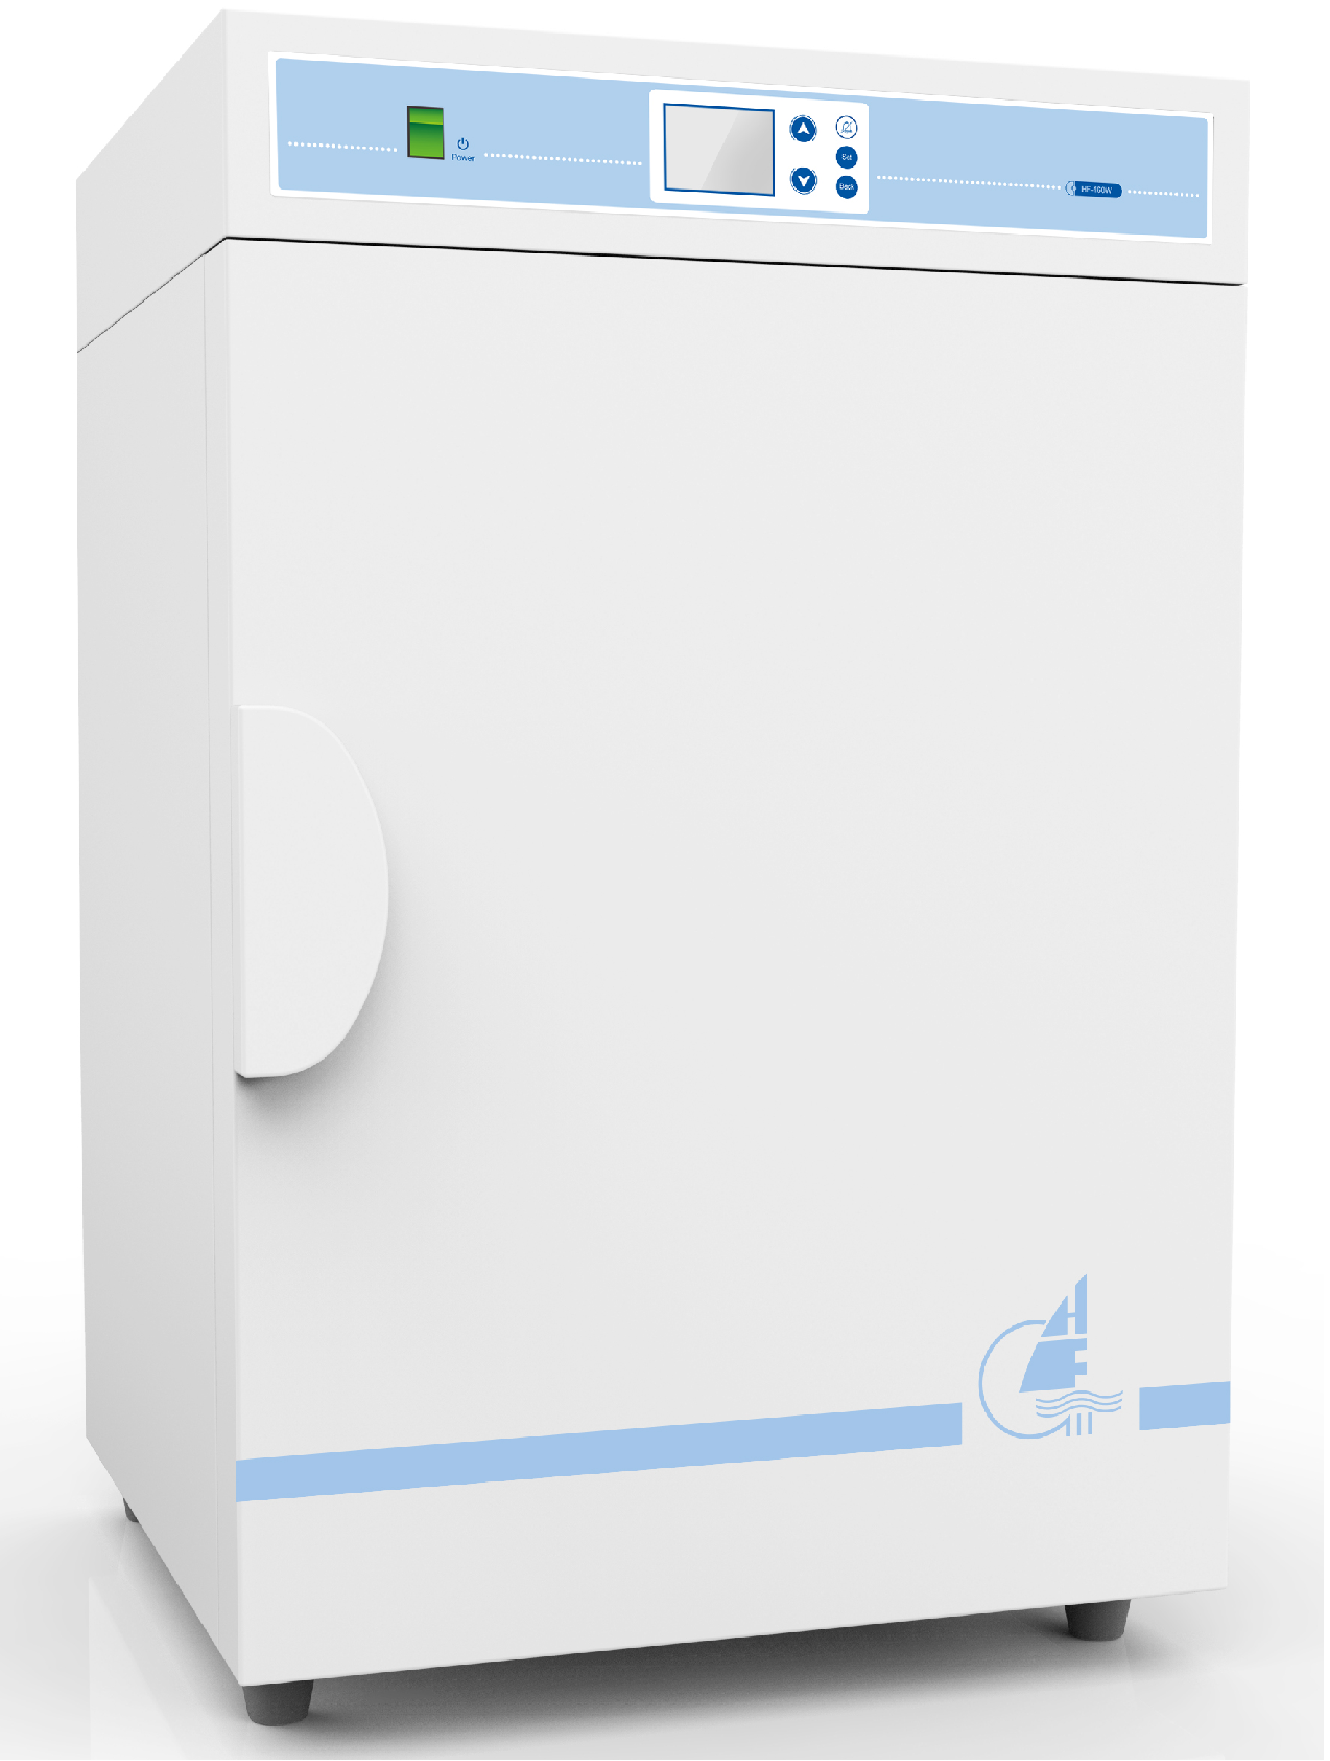 HF160W水套式二氧化碳培养箱